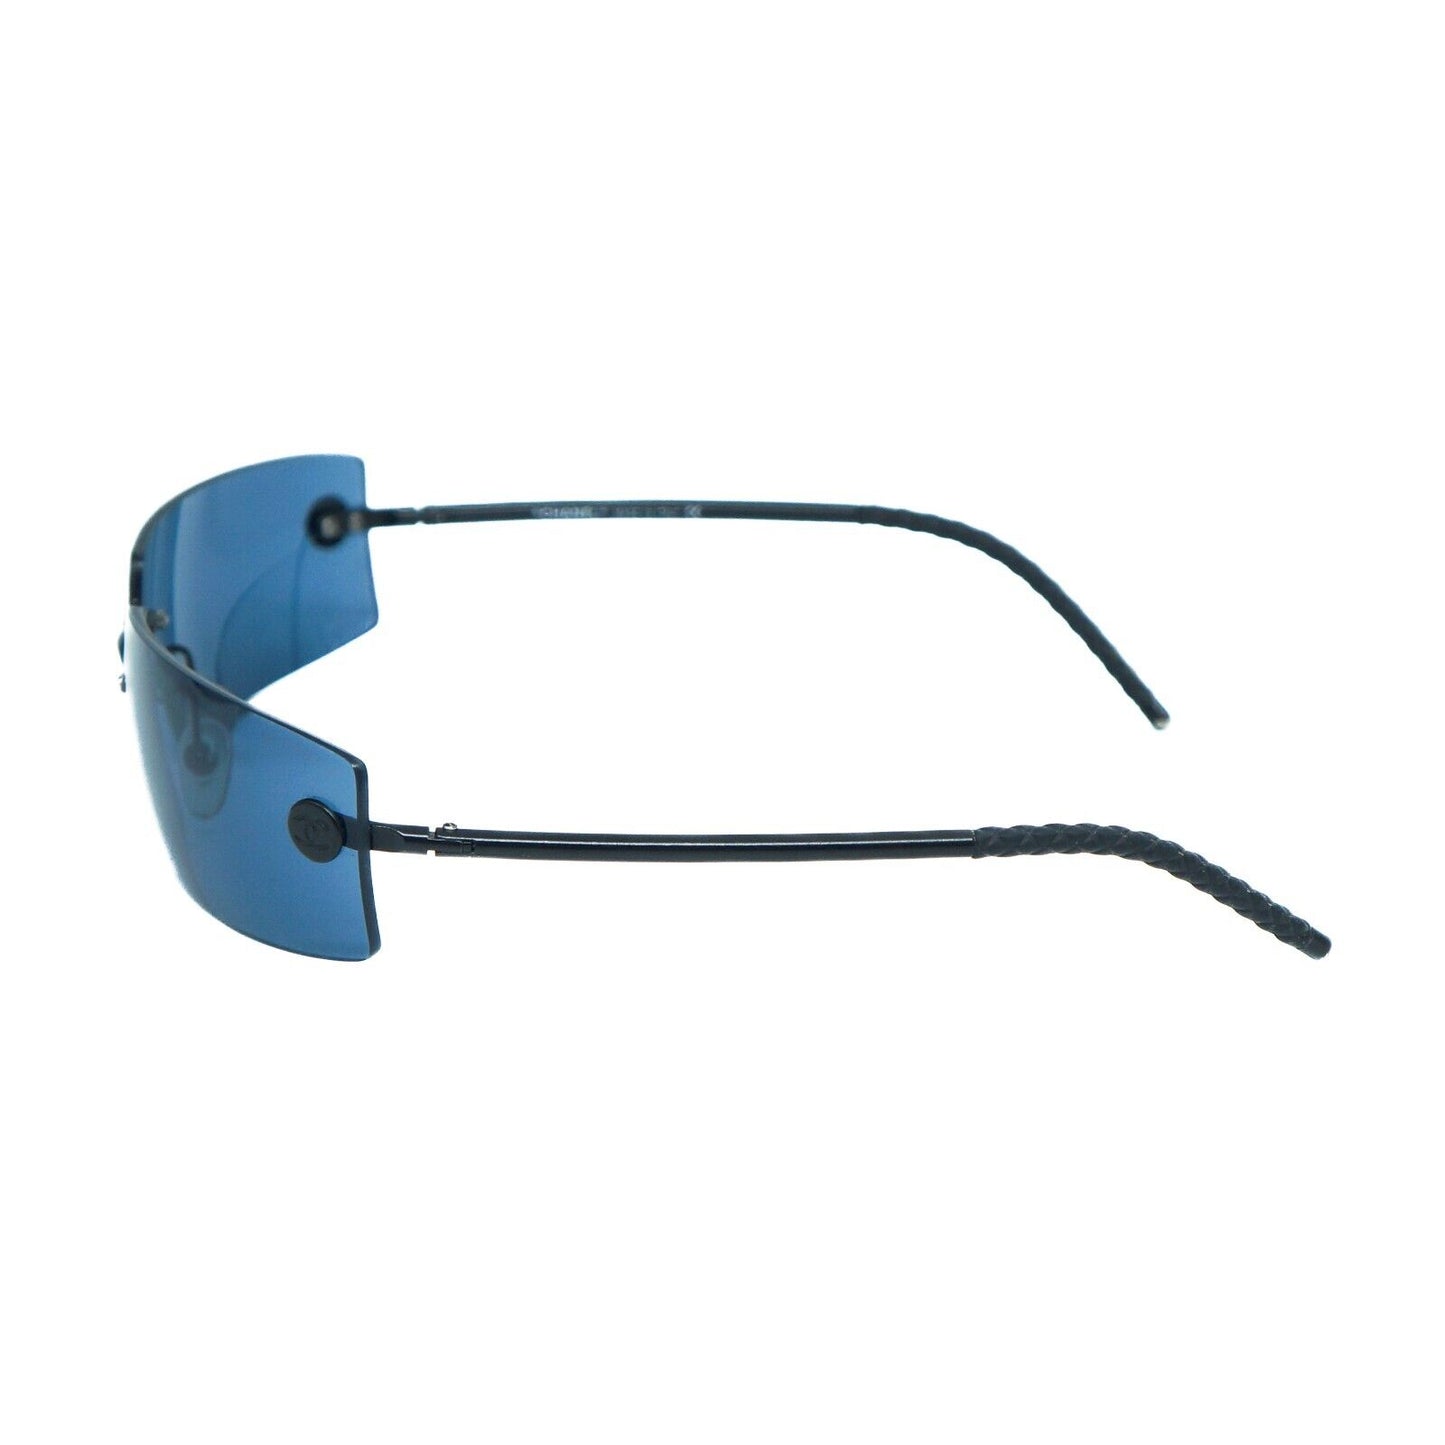 CHANEL 4047 Rimless Blue Sunglasses Vintage 90s 00s